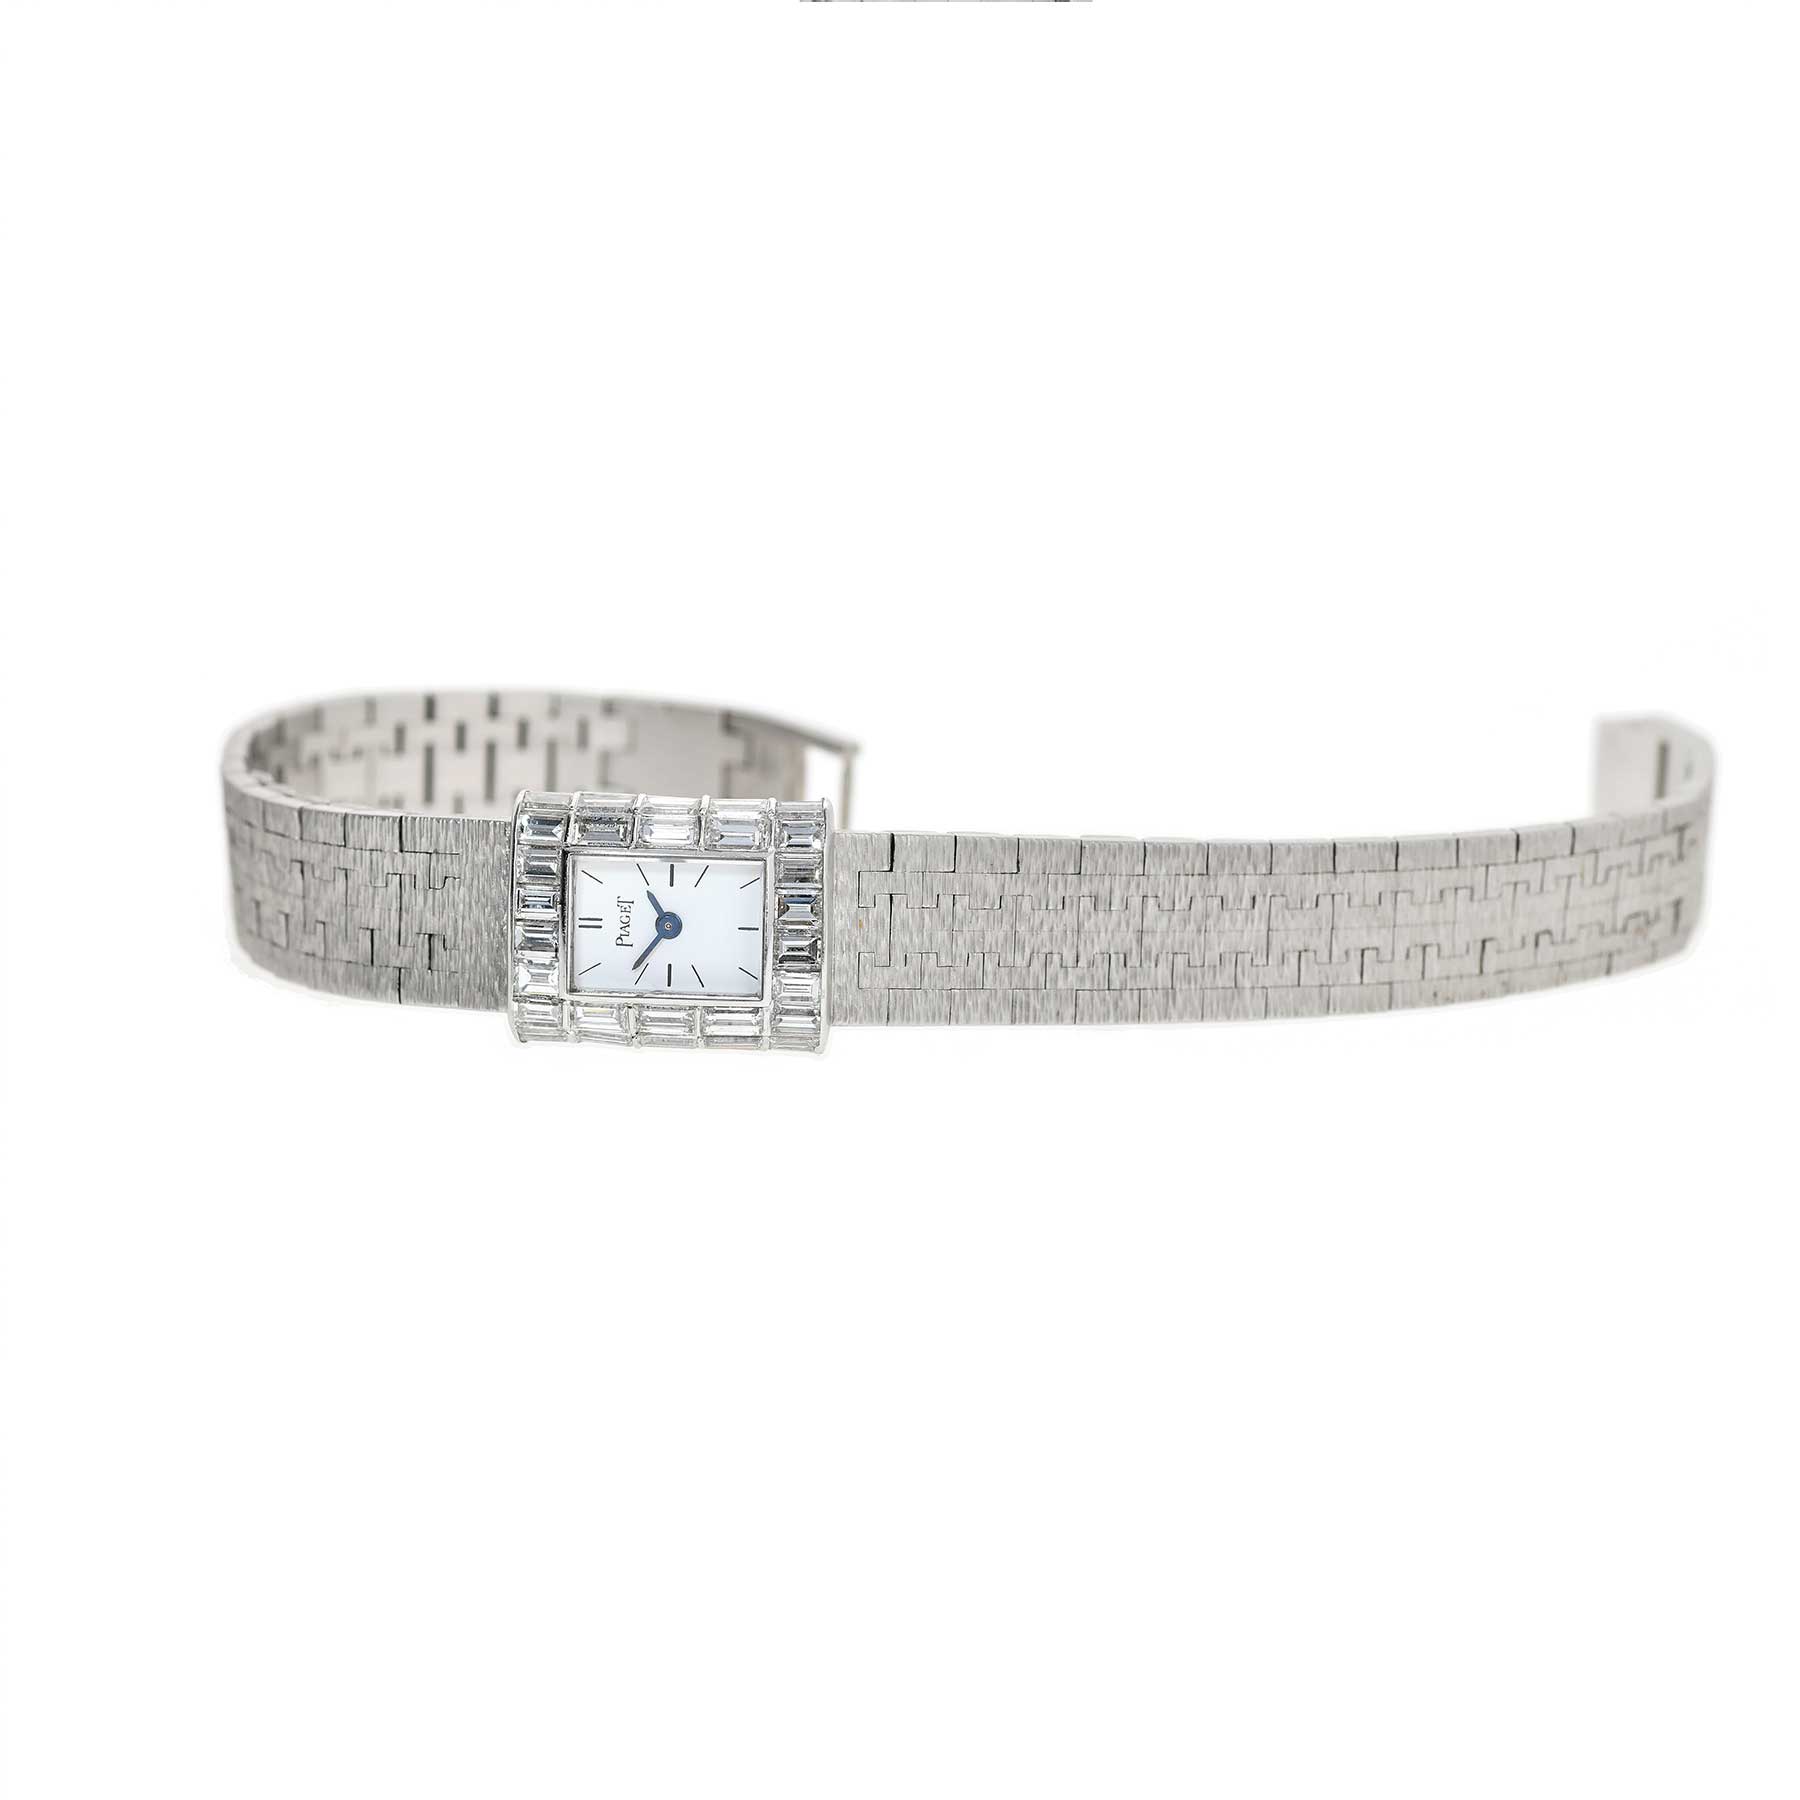 piaget-ref1220A6-baguette-diamond-bracelet-watch-img-main4